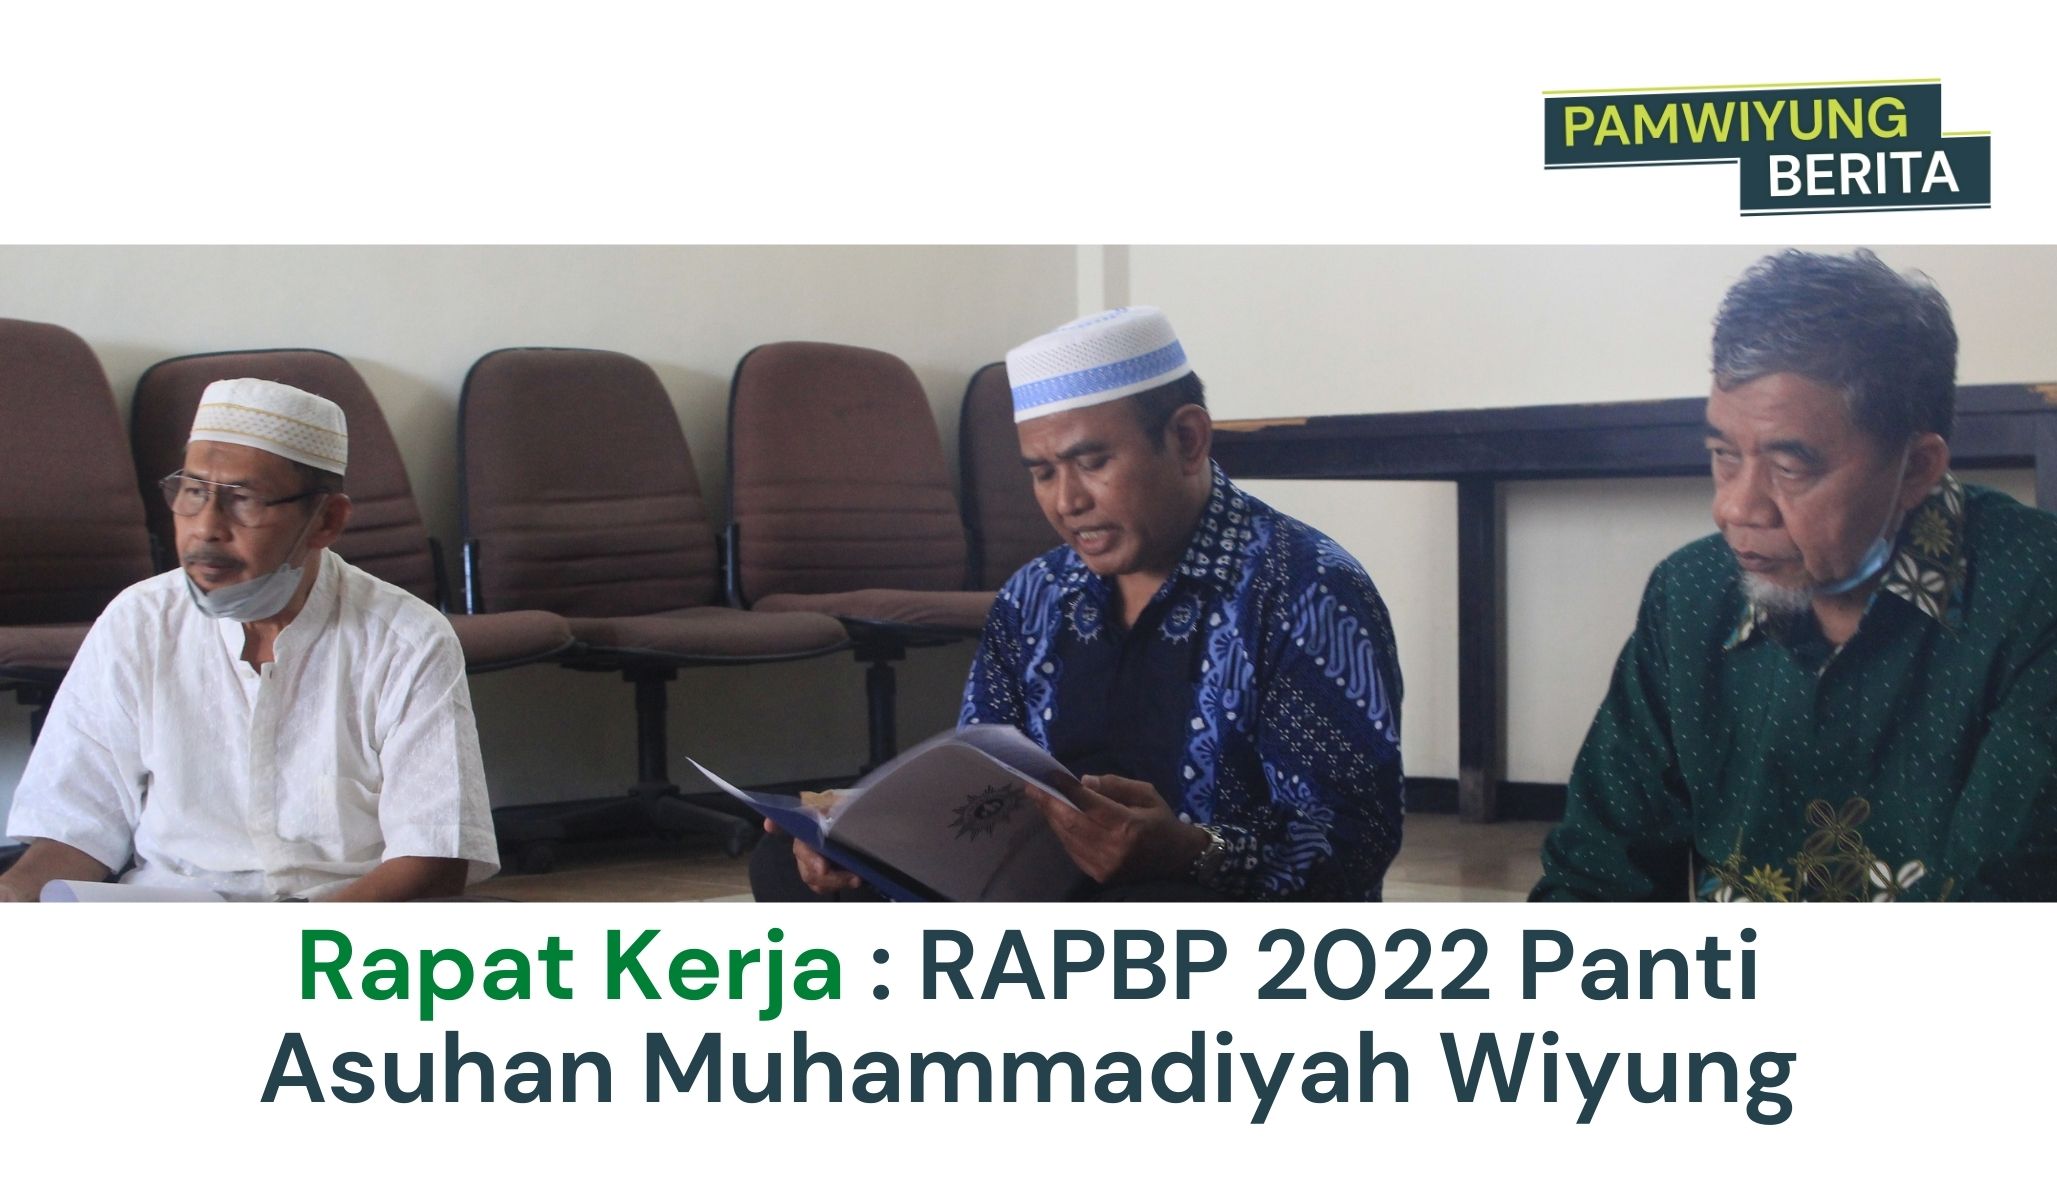 Rapat Kerja RAPBP 2022 Panti Asuhan Muhammadiyah Wiyung